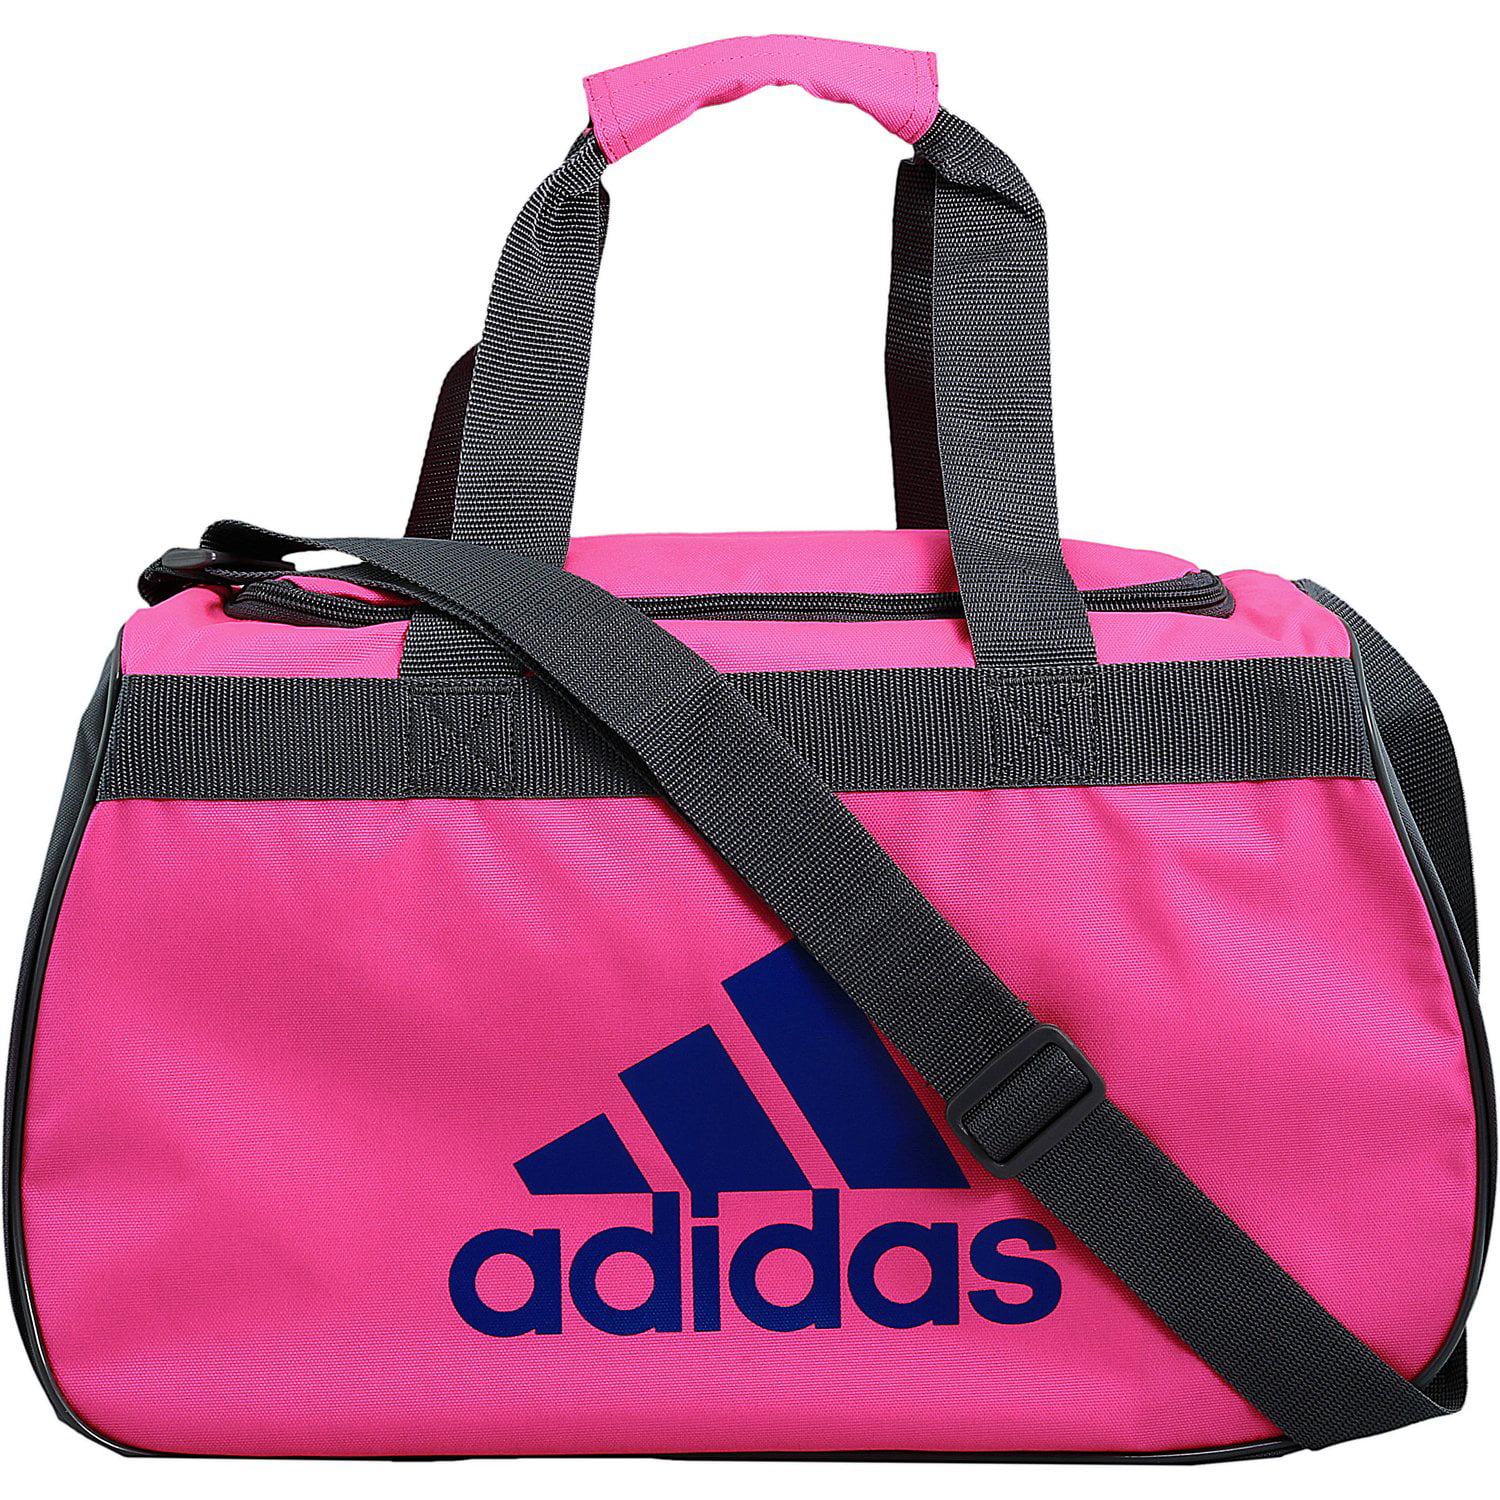 adidas sports bag pink